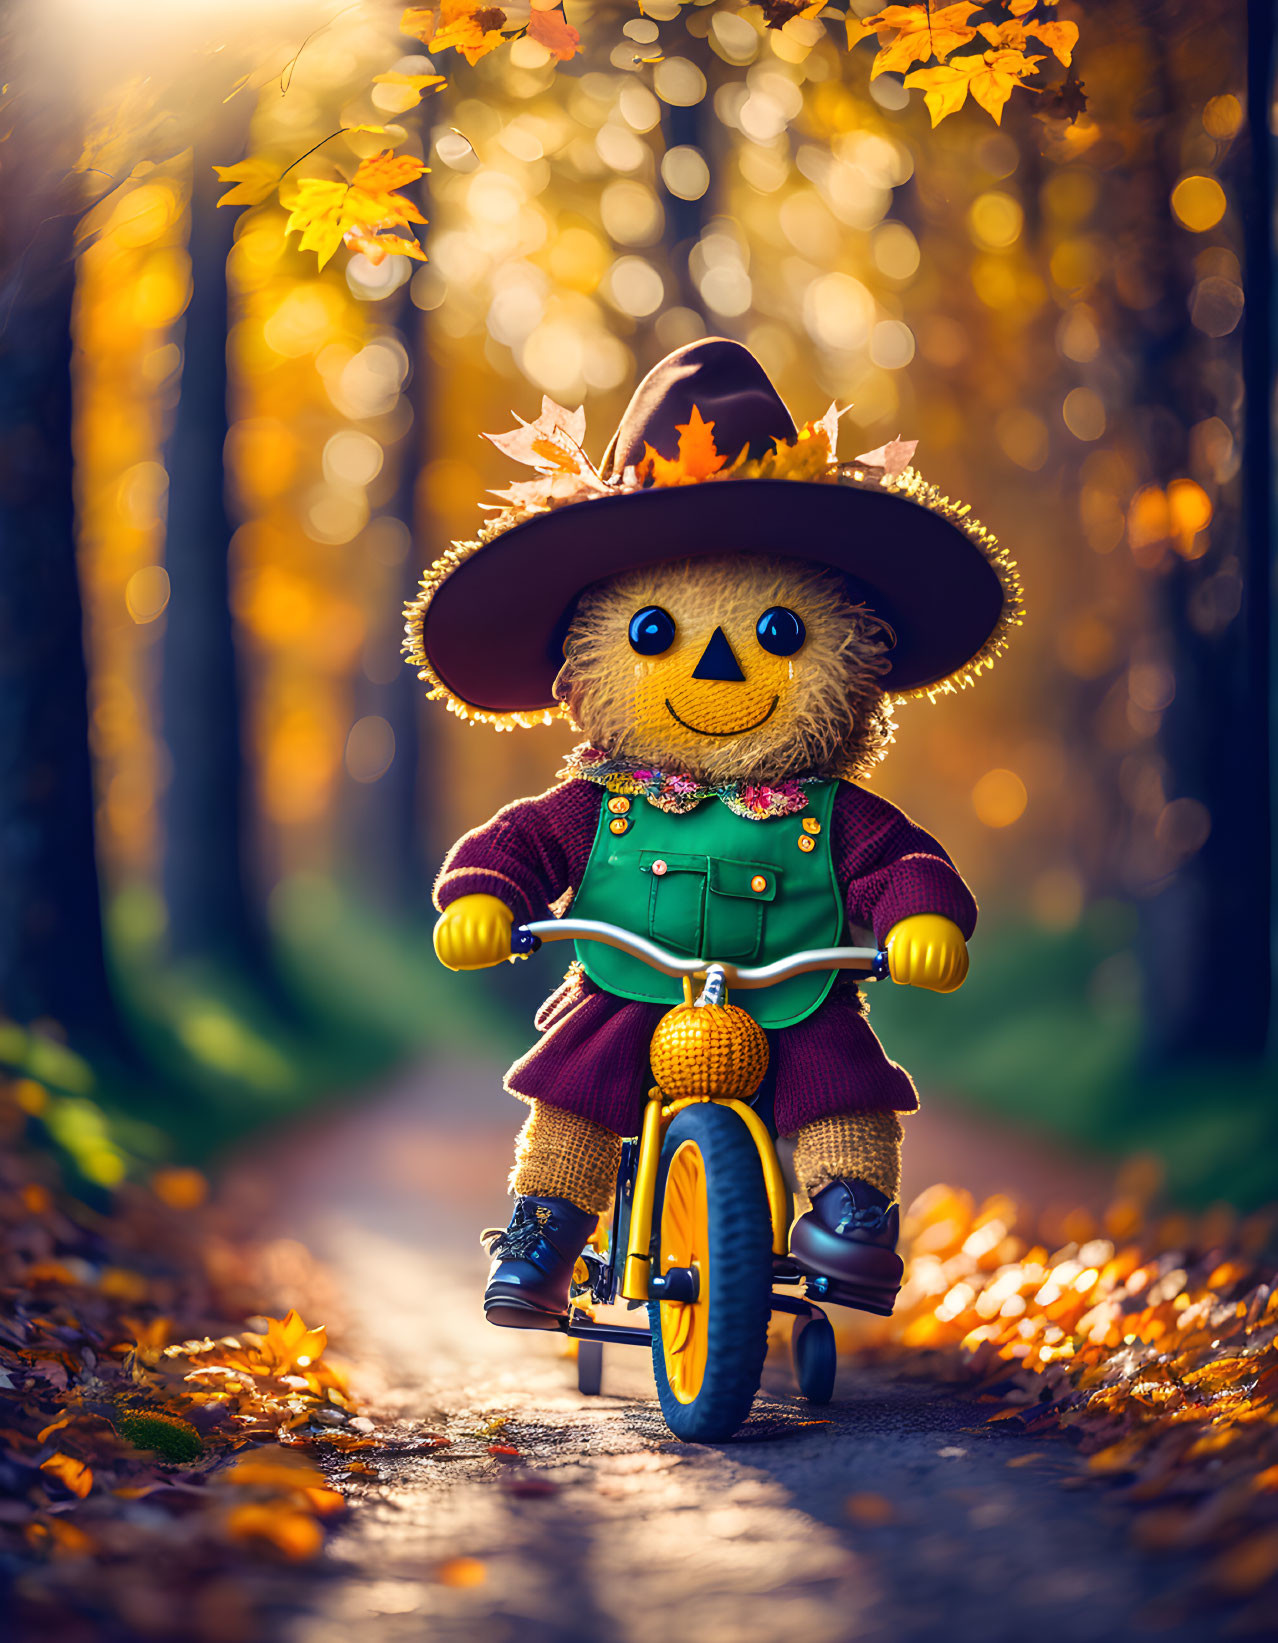 Cute little happy scarecrow